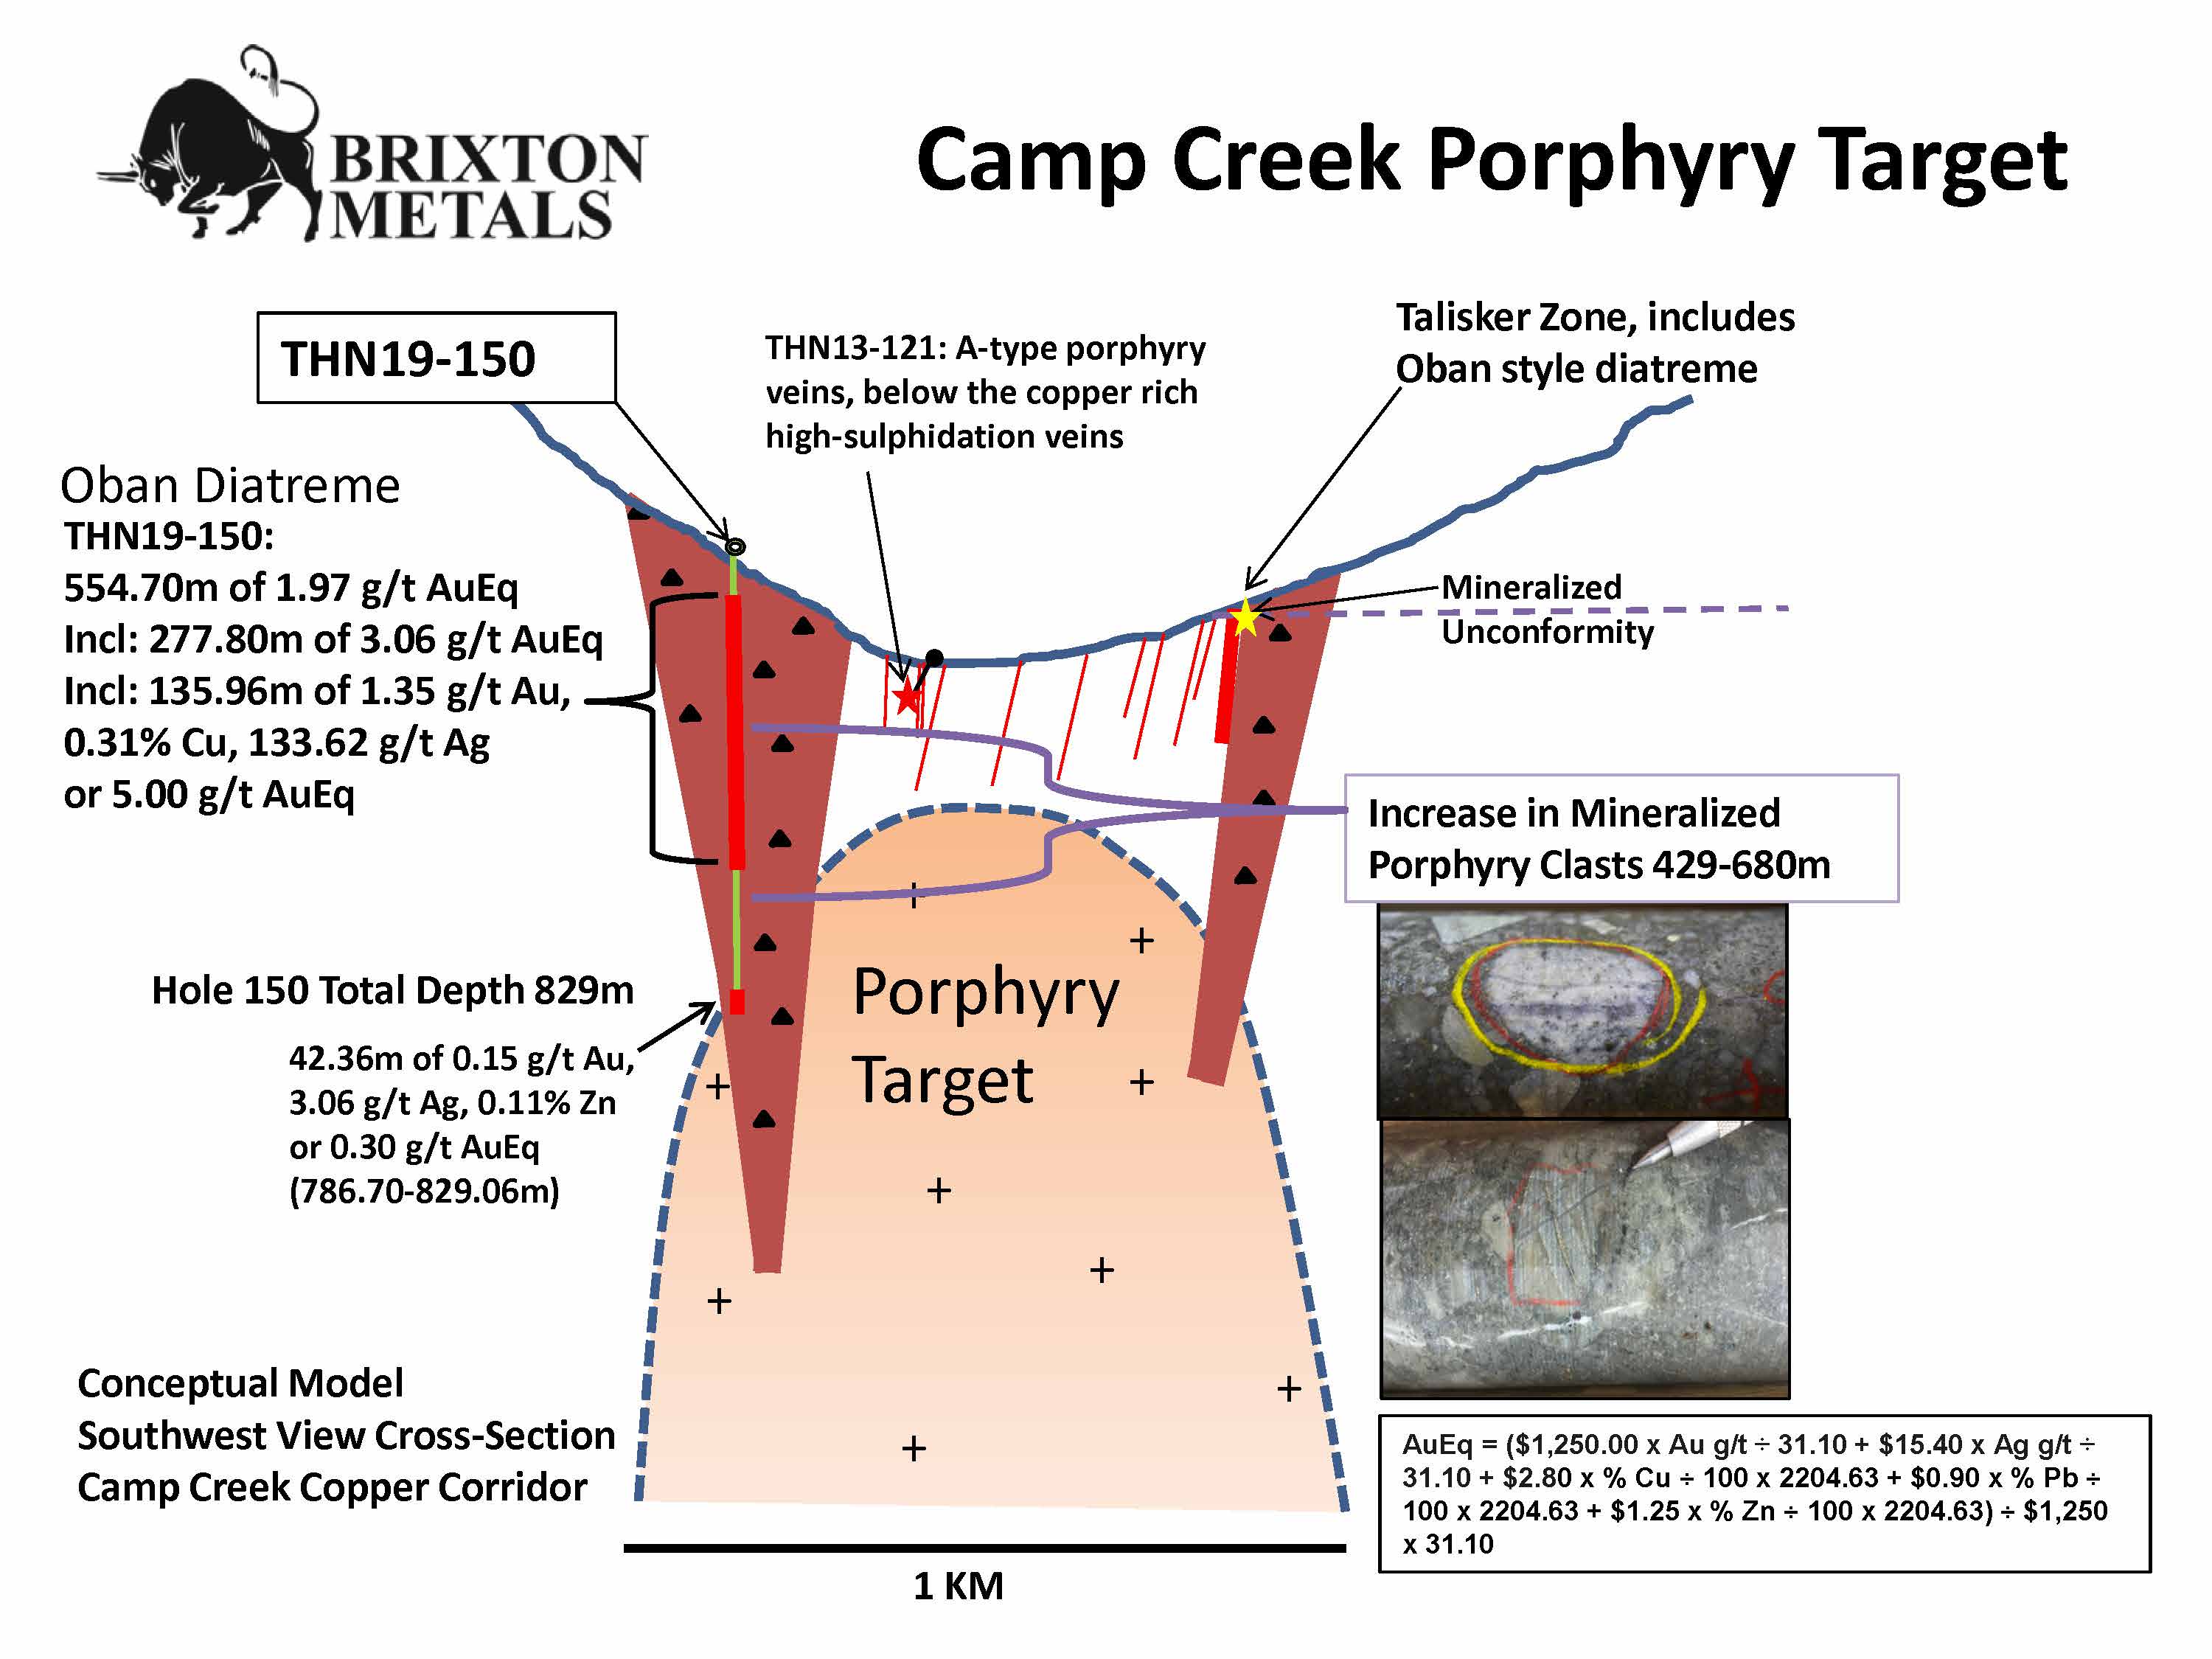 Figure 4. Camp Creek Porphyry Target r